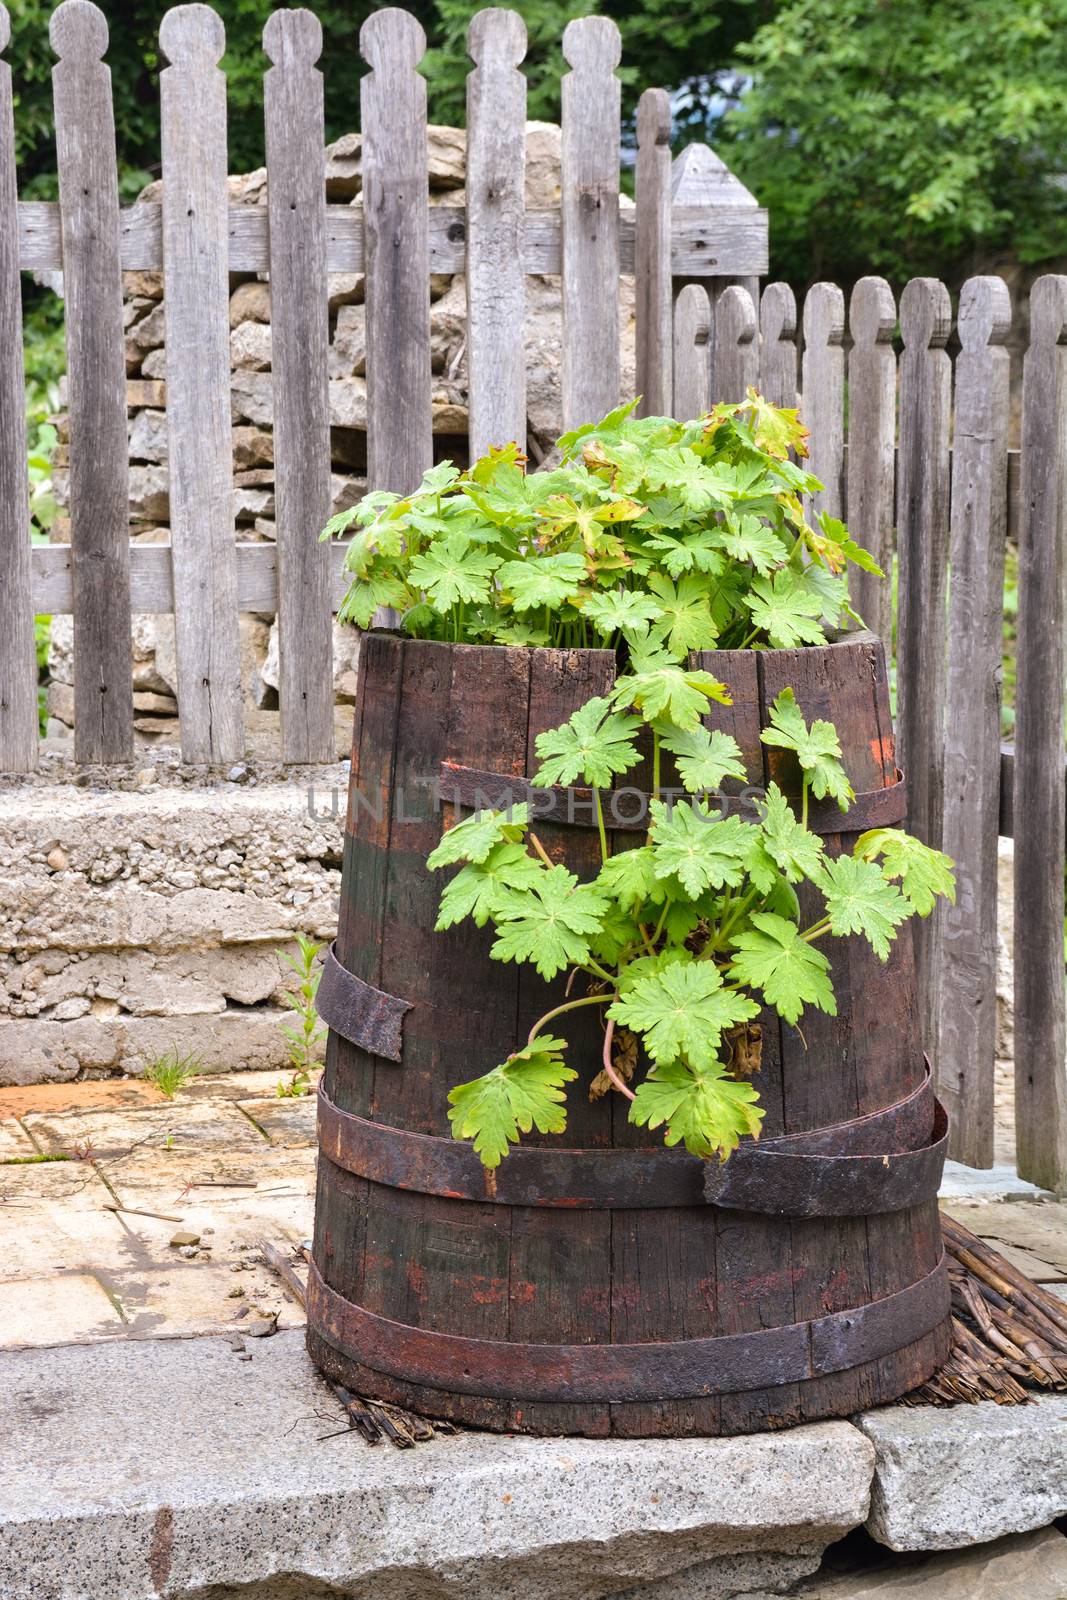 Green vegetation in an old barrel in the backyard by velislava